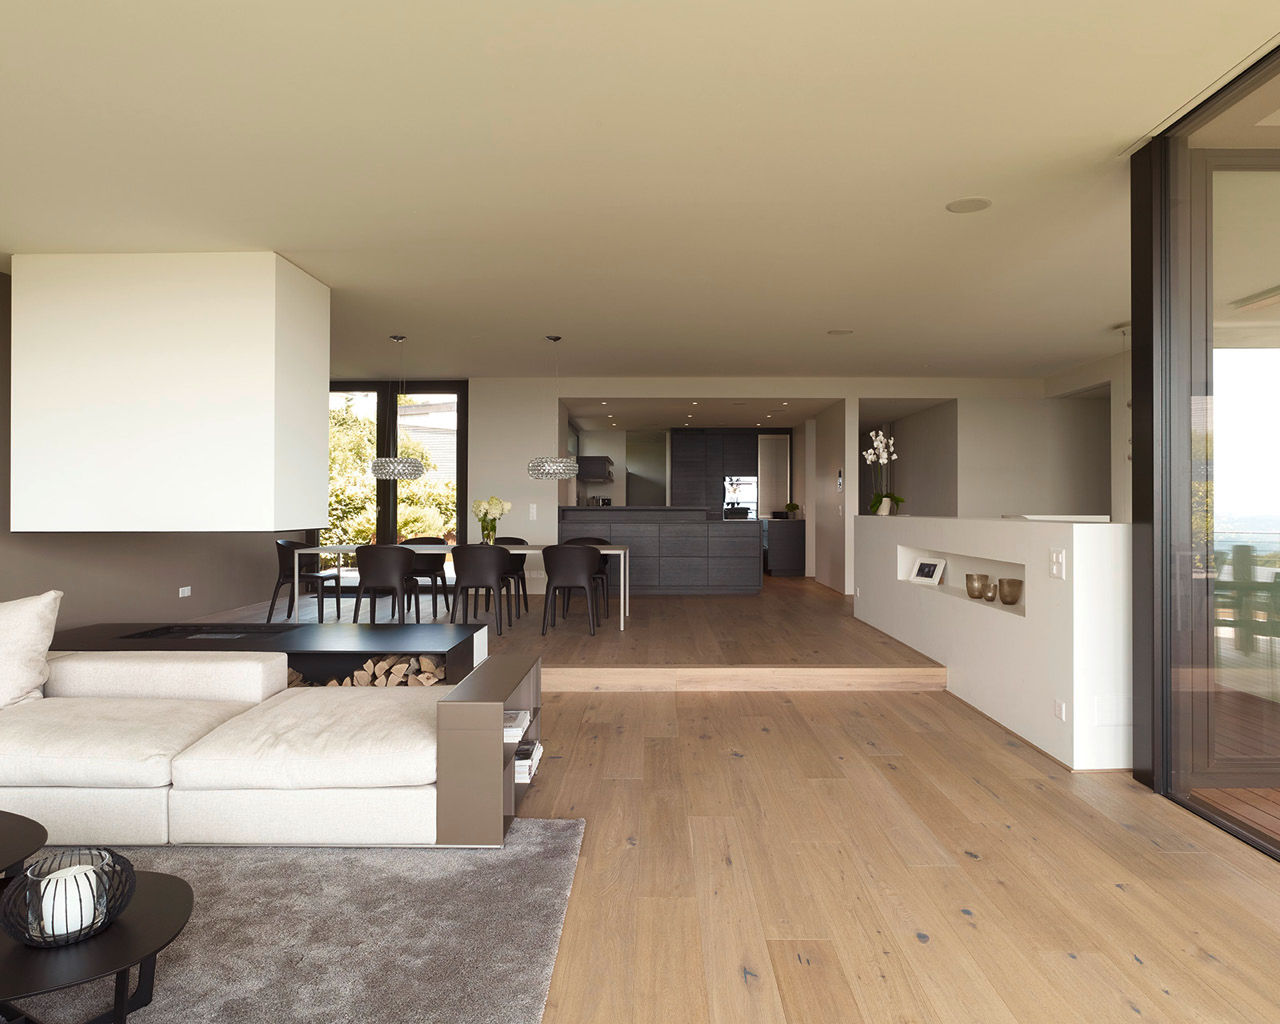 Objekt 329, meier architekten zürich meier architekten zürich Modern Living Room